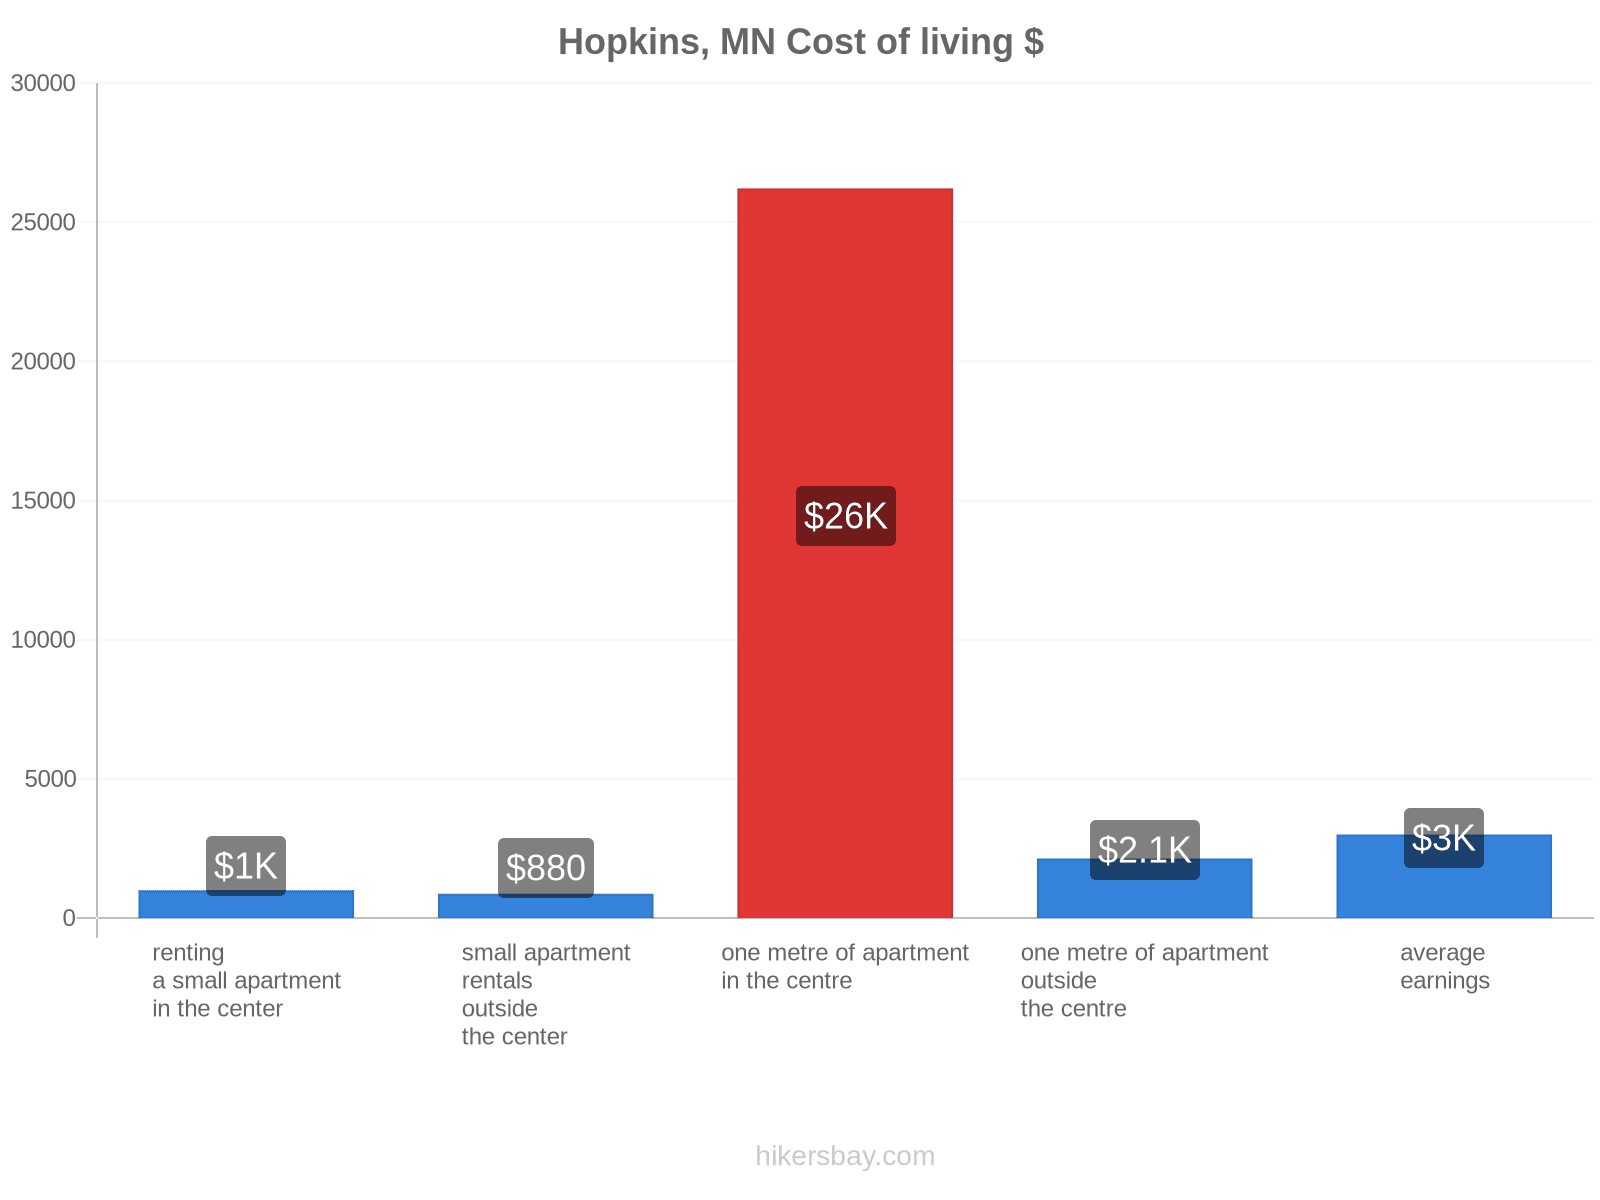 Hopkins, MN cost of living hikersbay.com